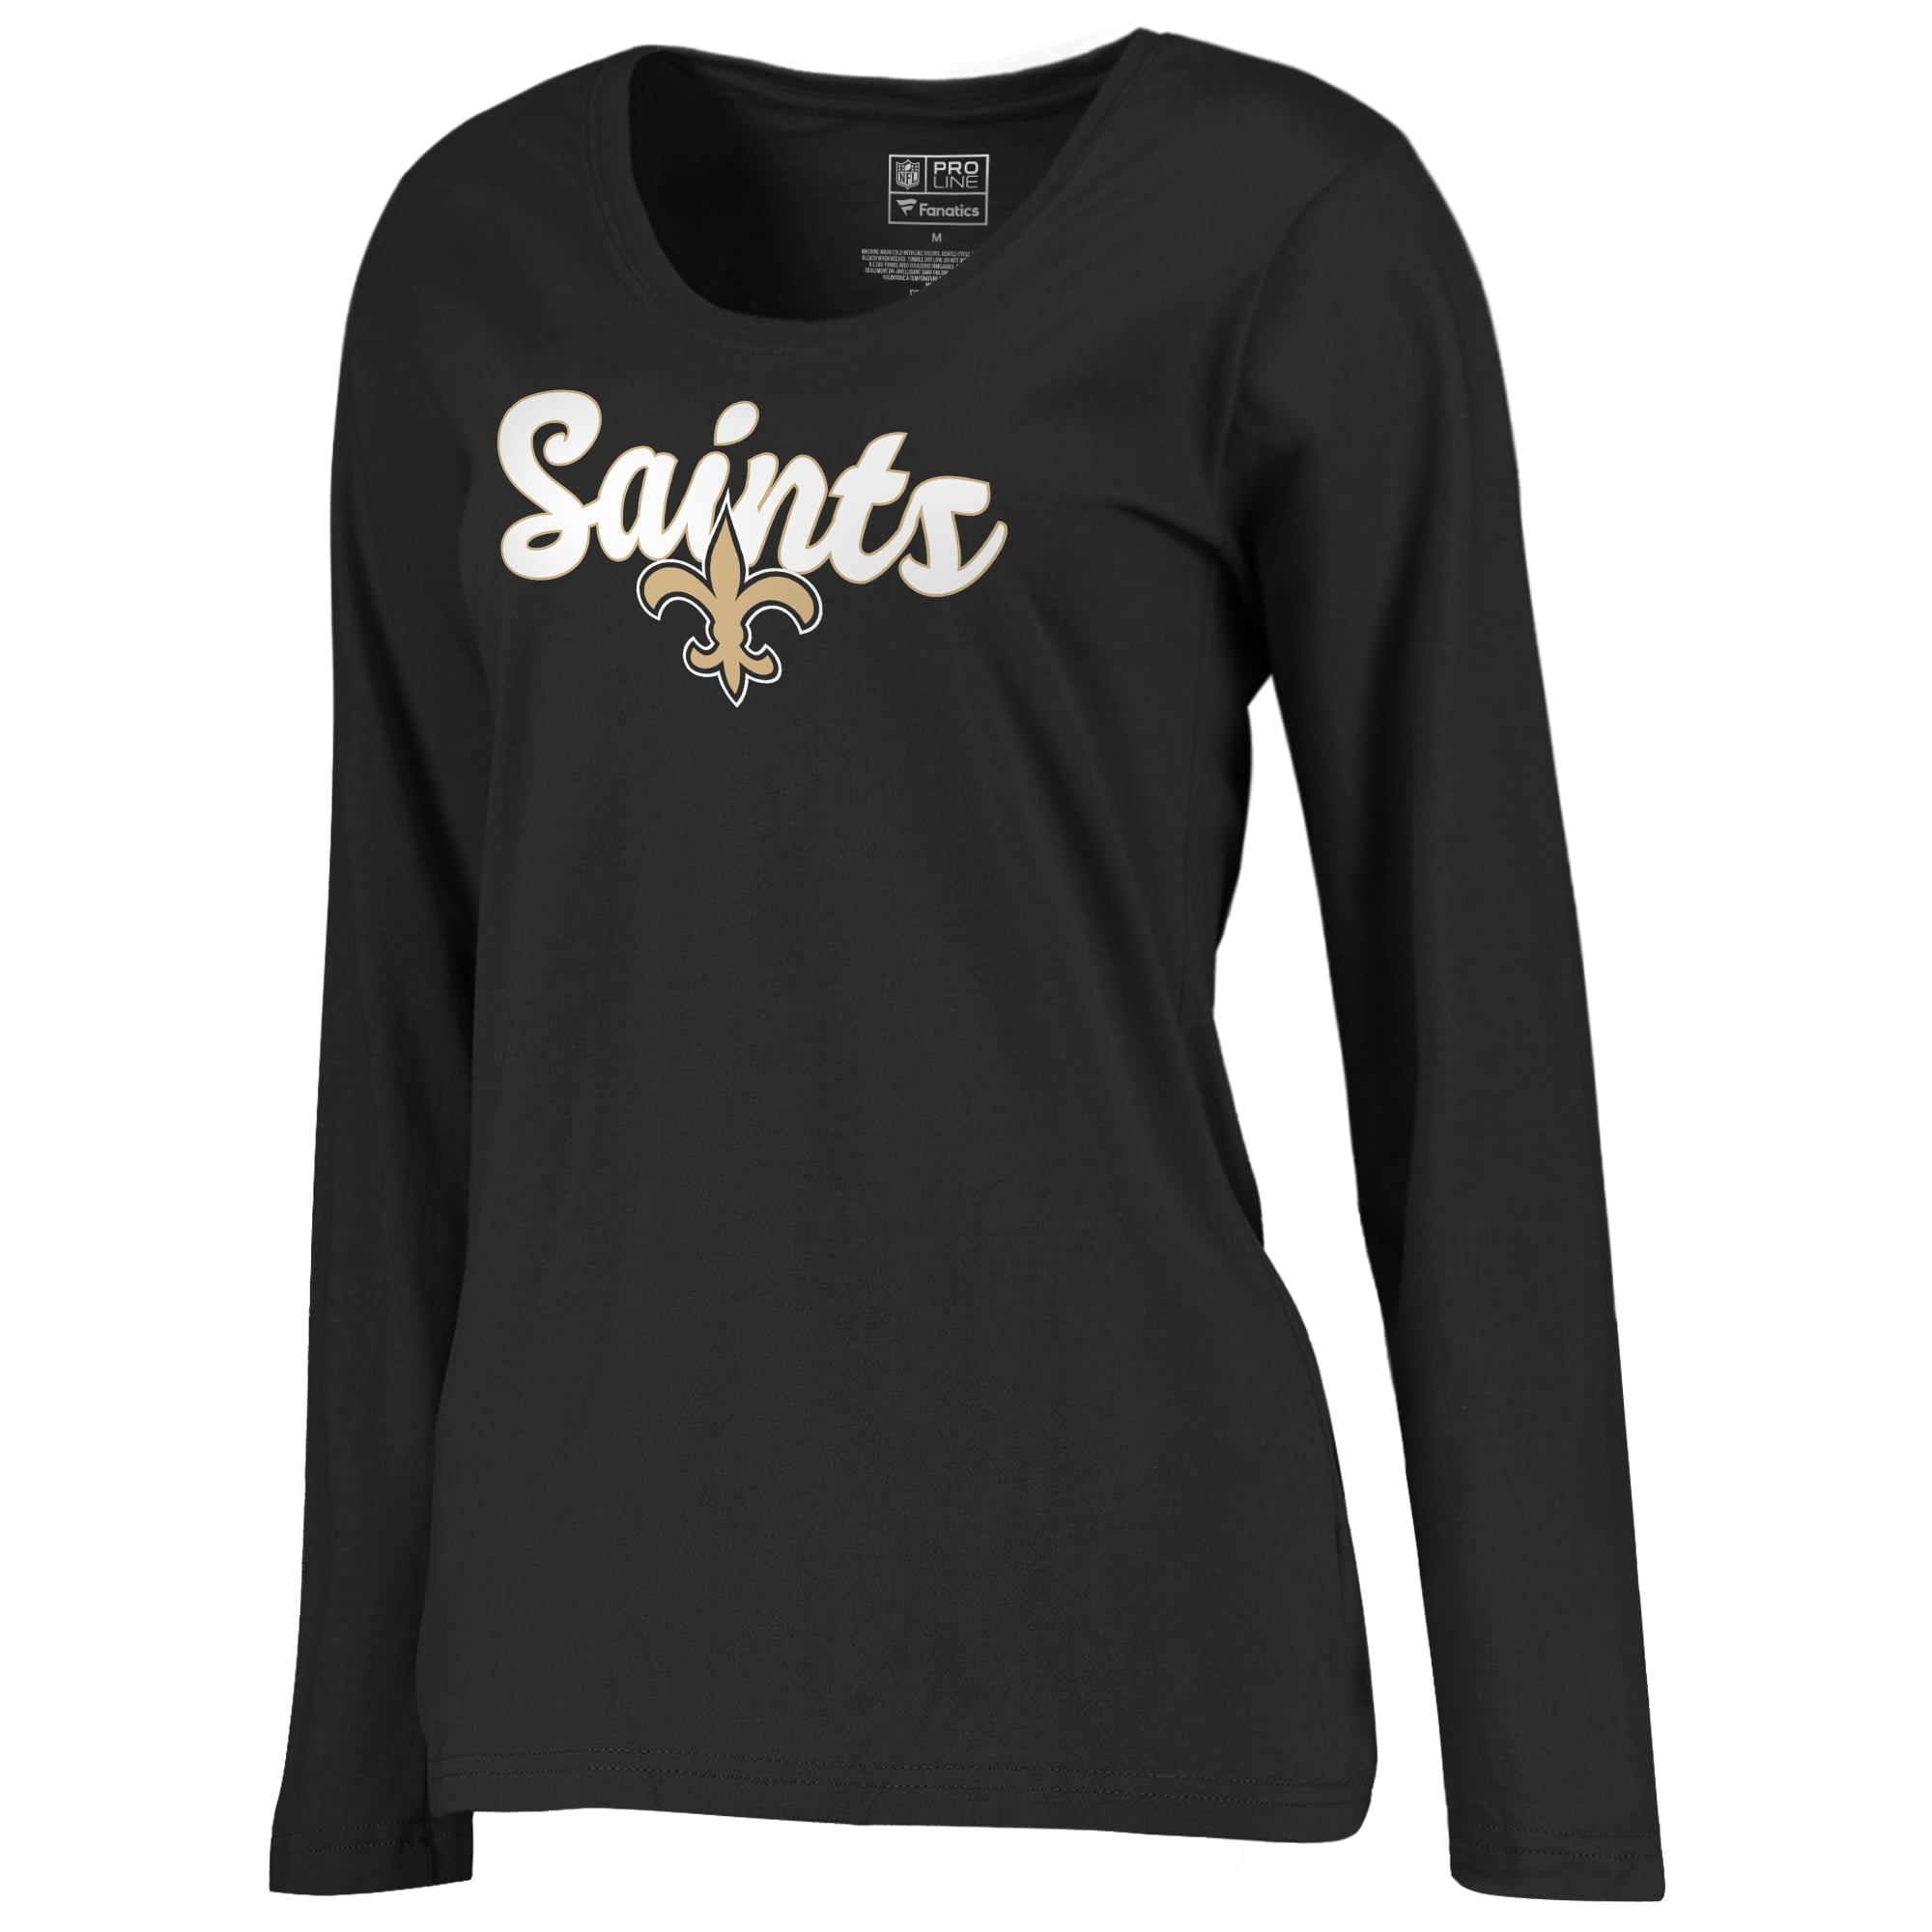 new orleans saints female jersey